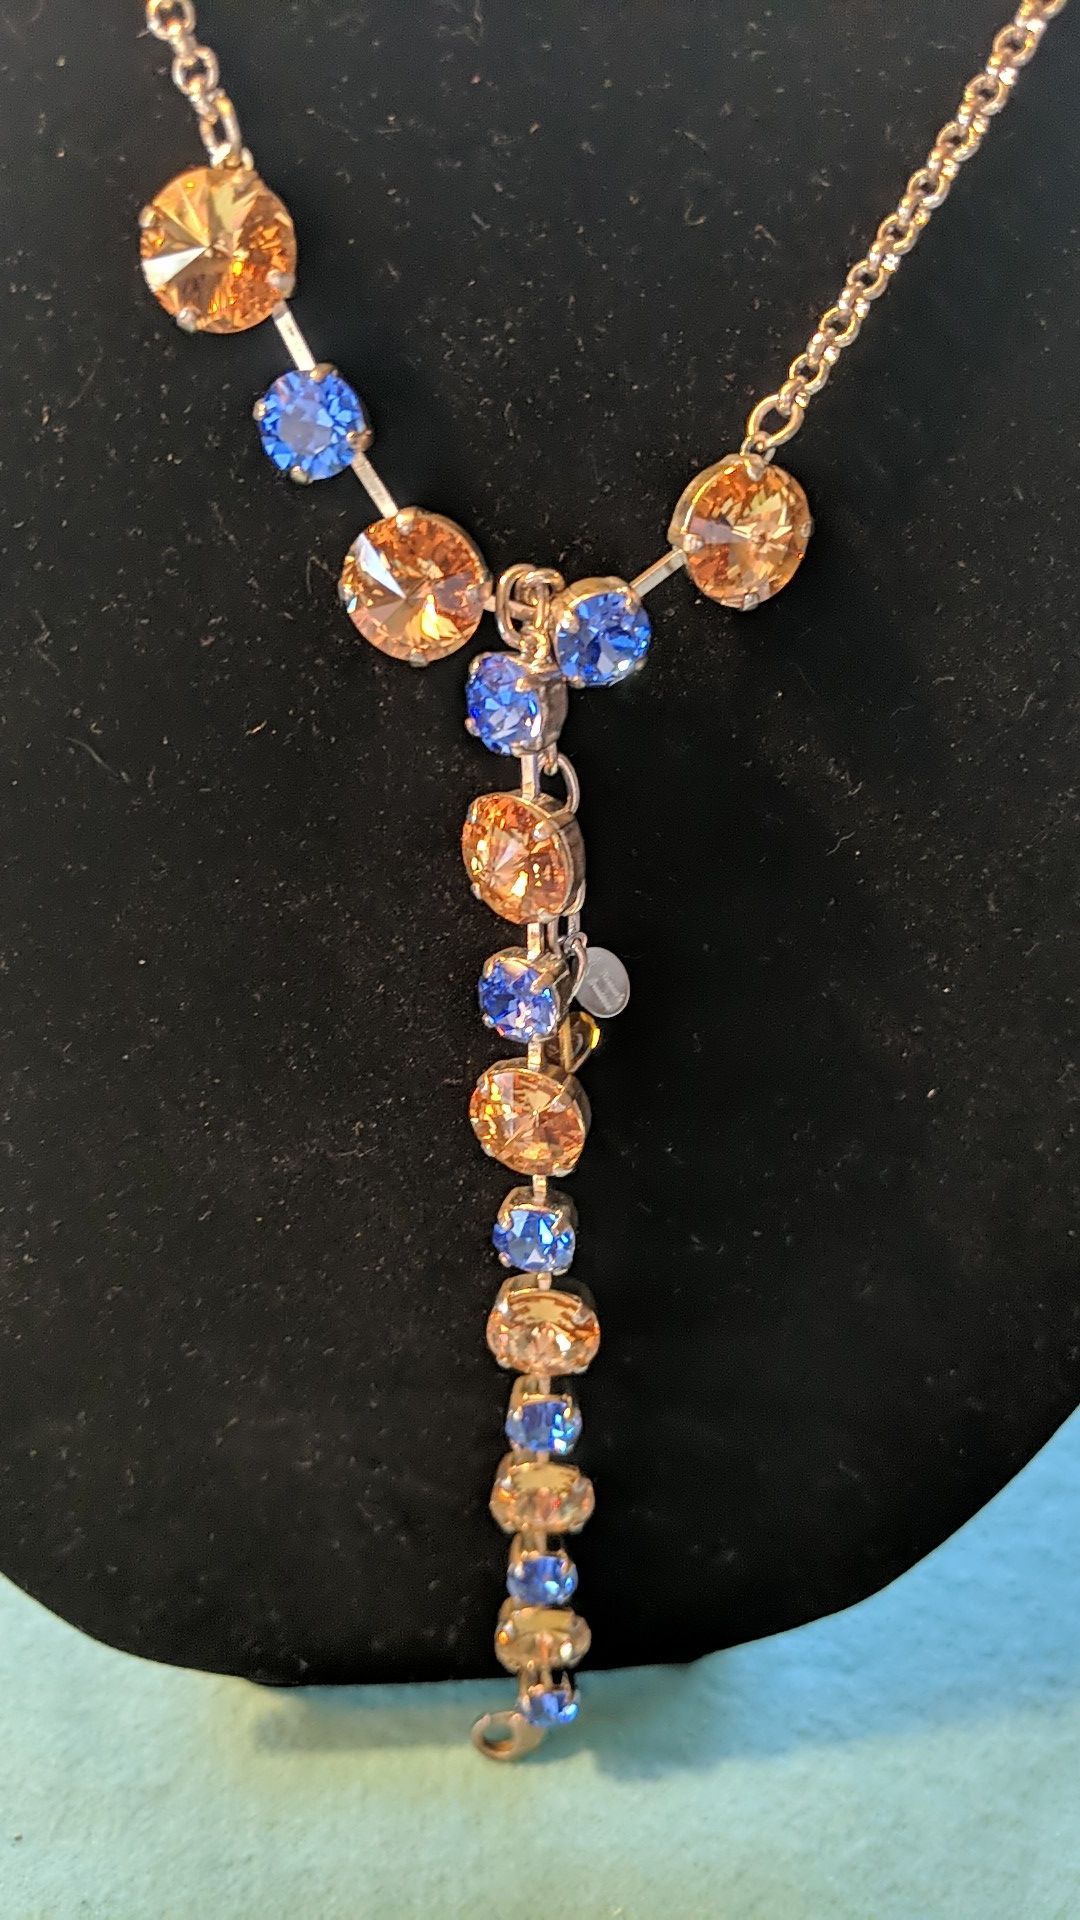 Handmade Crystal Necklace and Bracelet